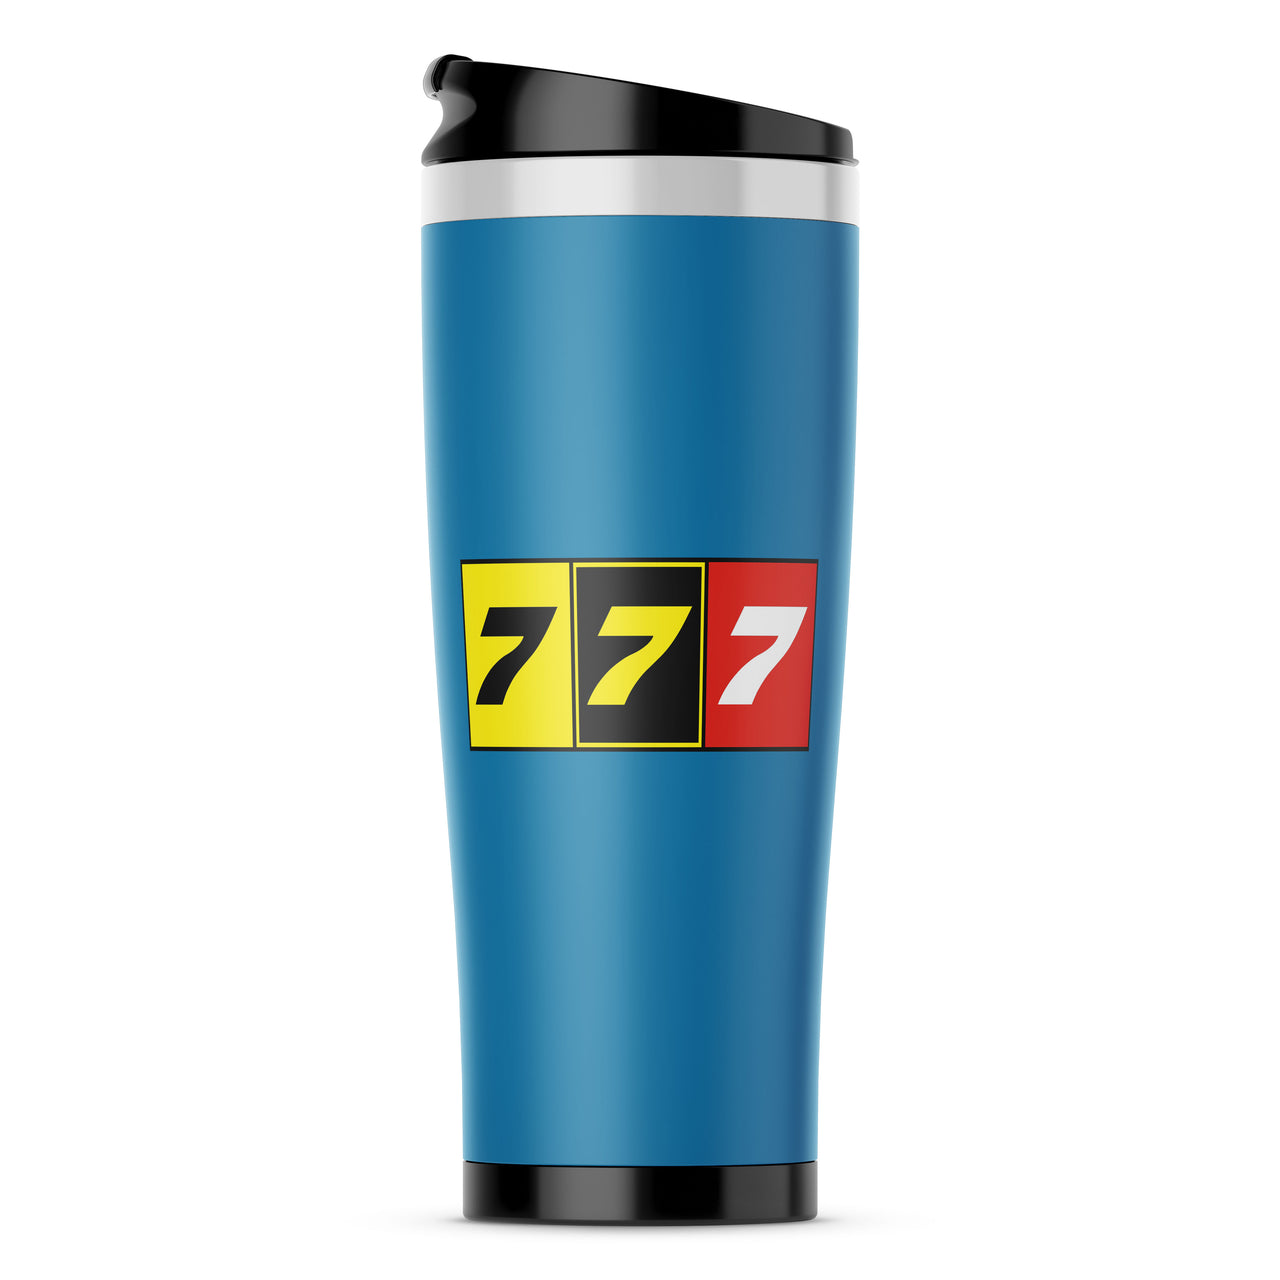 Flat Colourful 777 Designed Travel Mugs